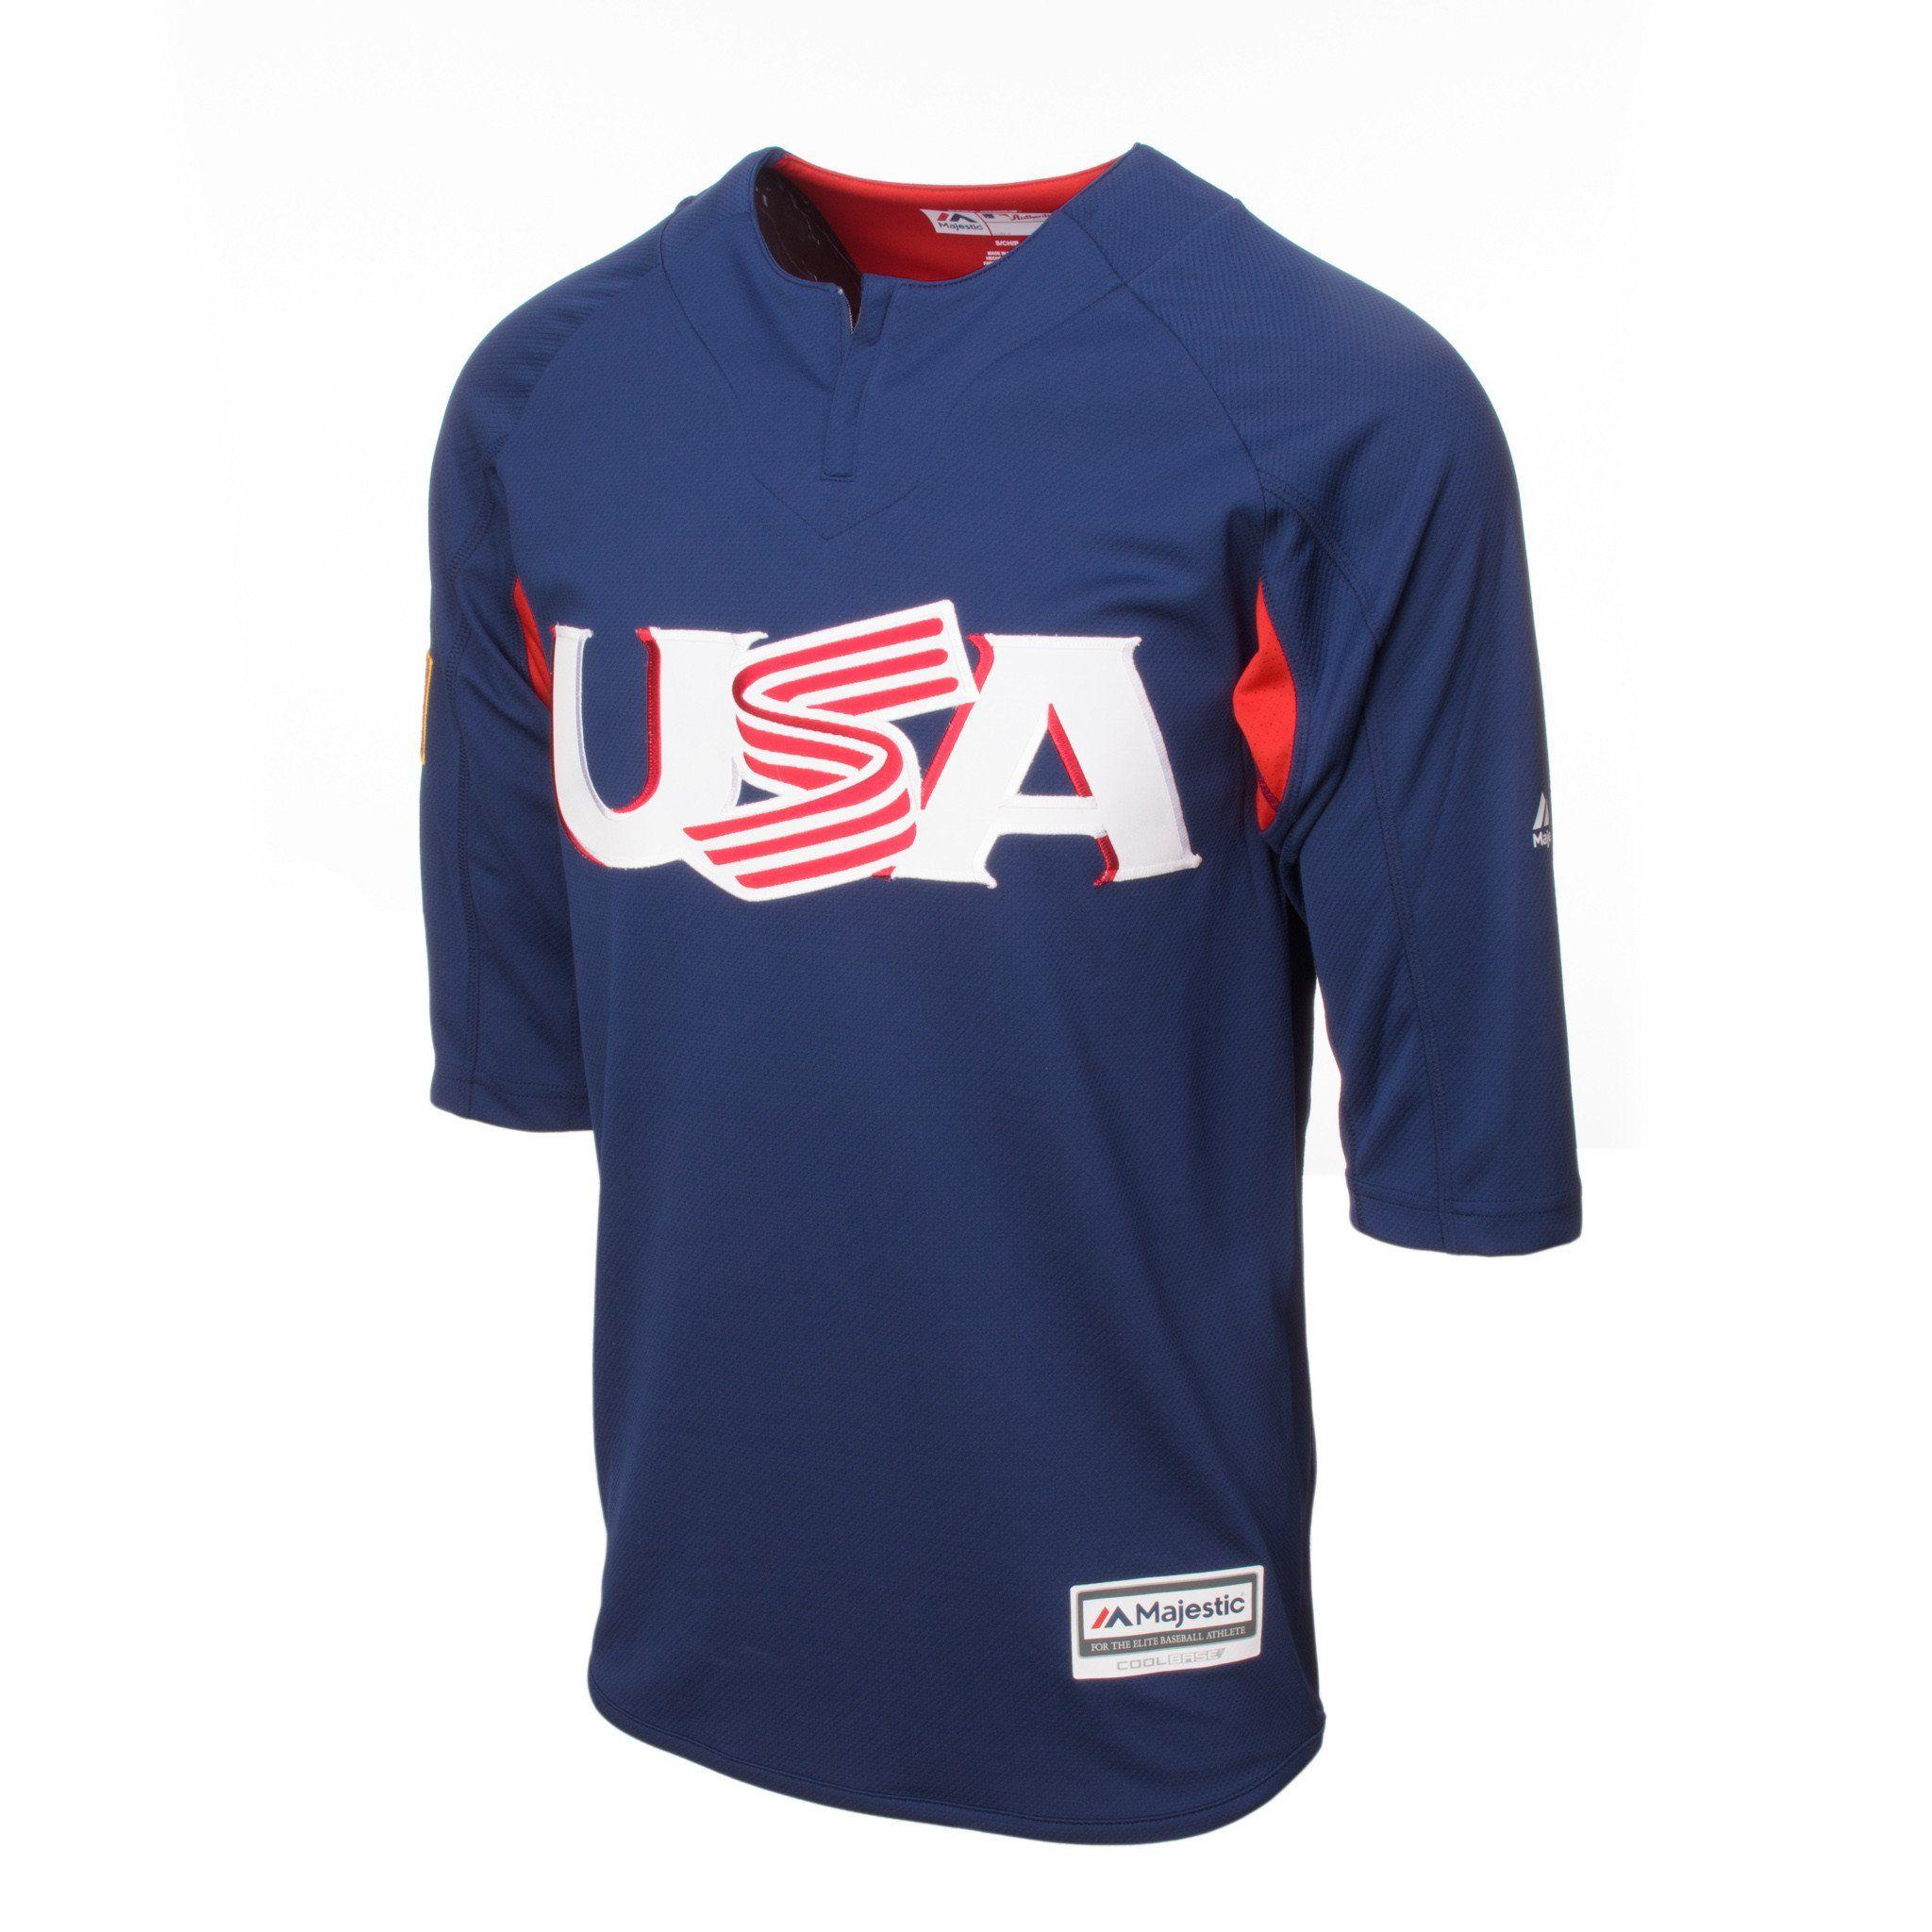 Majestic Clothing Logo - 3/4 Sleeve On-Field BP Trainer Jersey - Jersey Logo | USA Baseball Shop